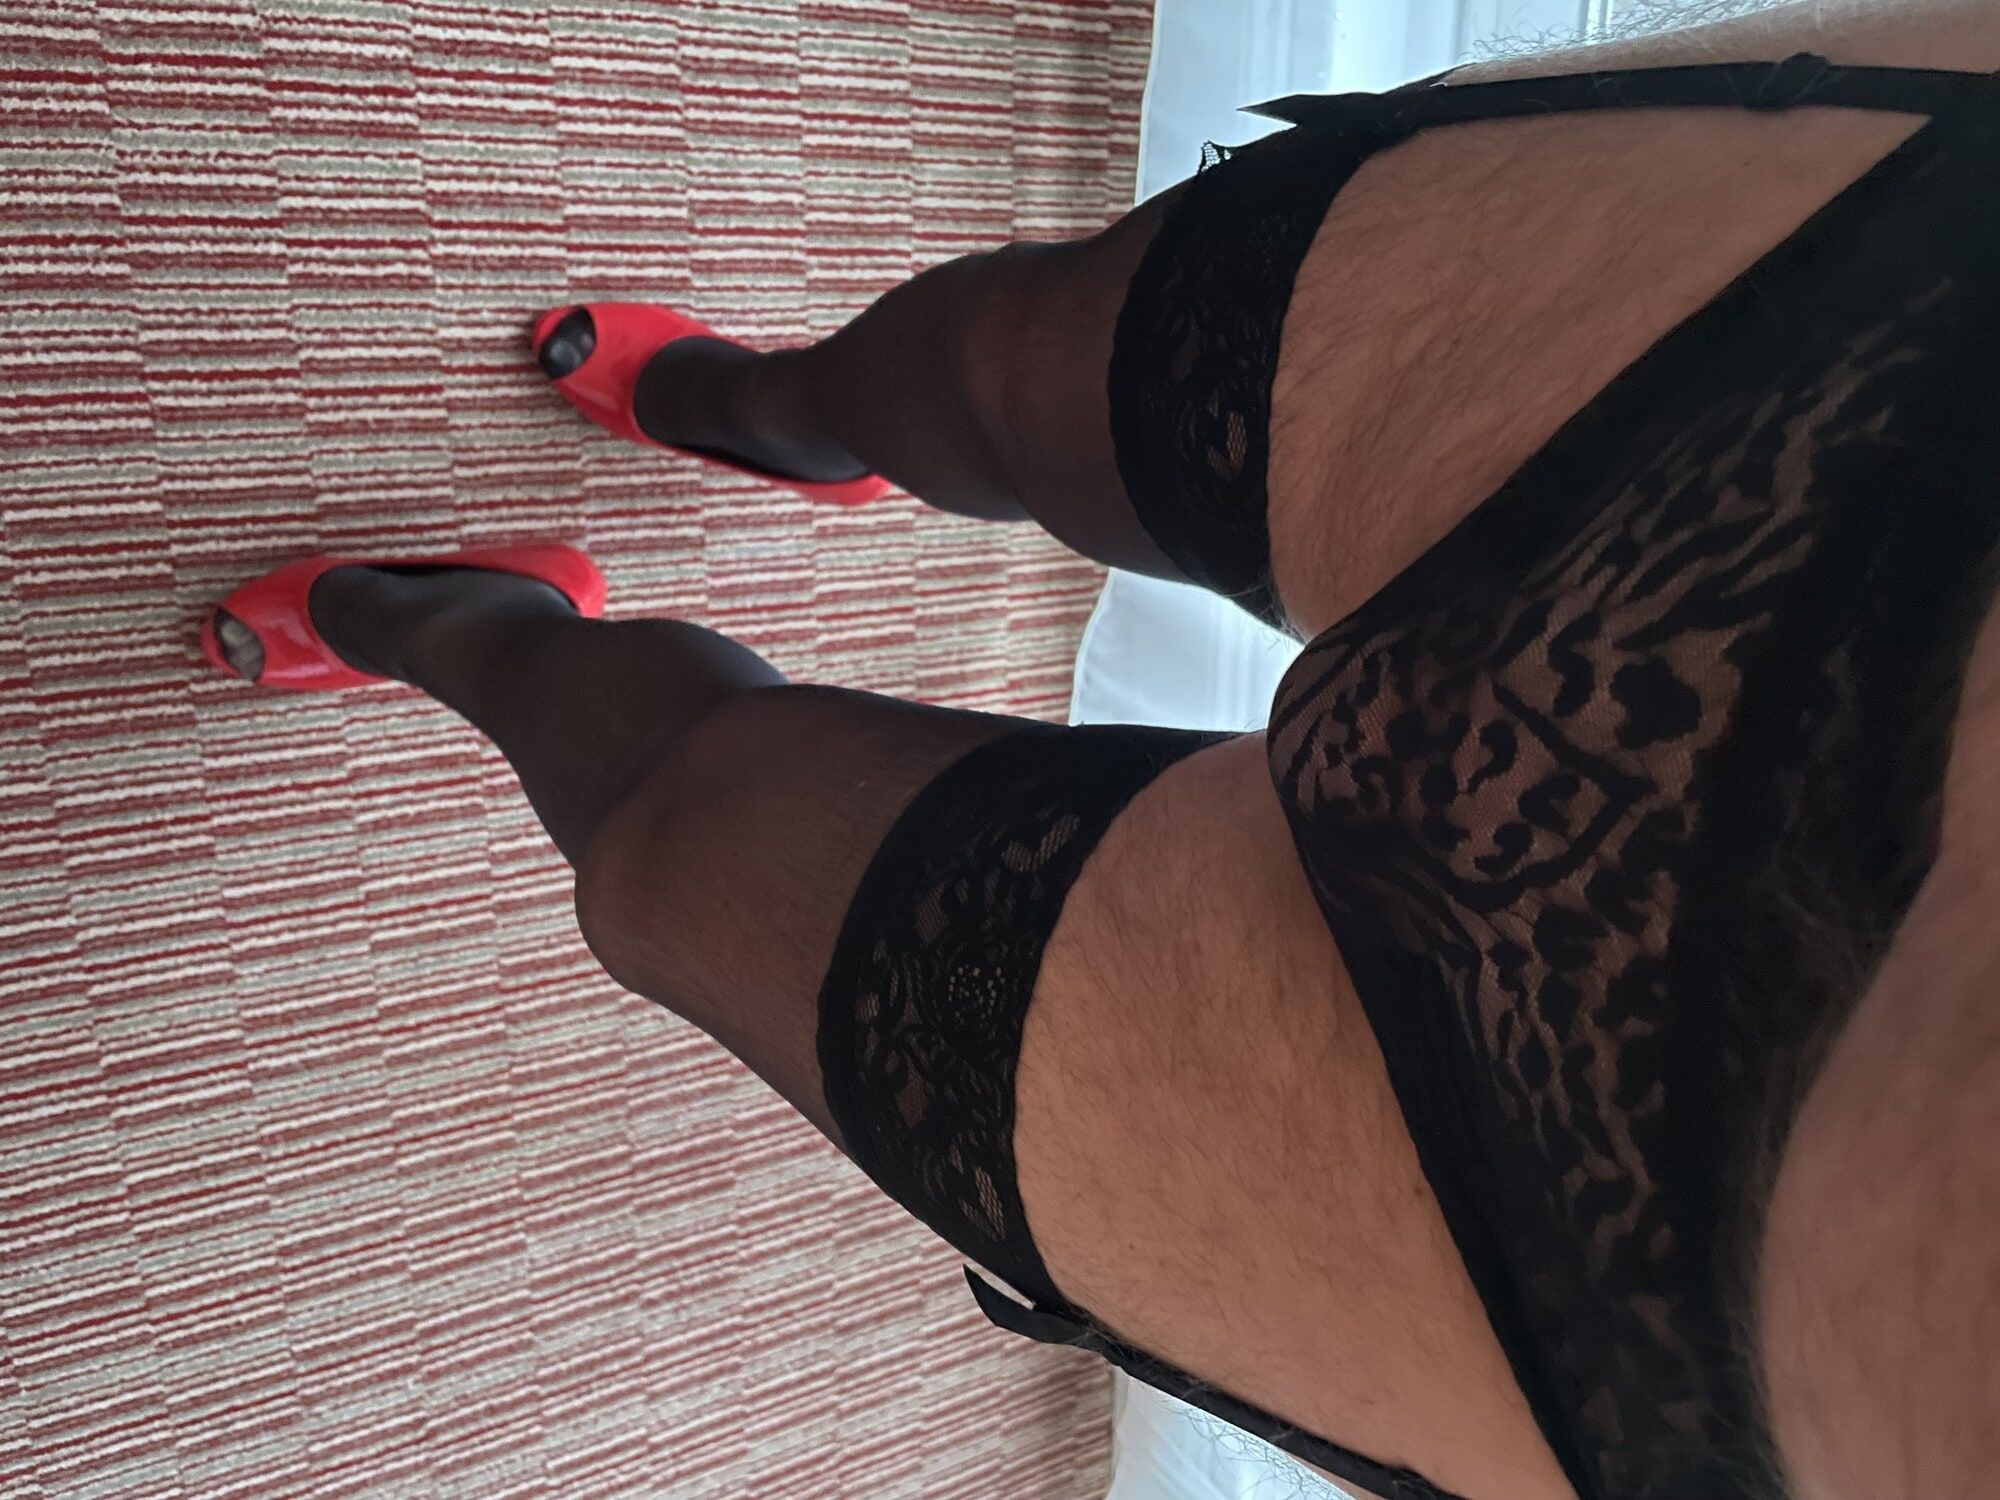 Enjoying the sensual feel of stockings and heels 👠 